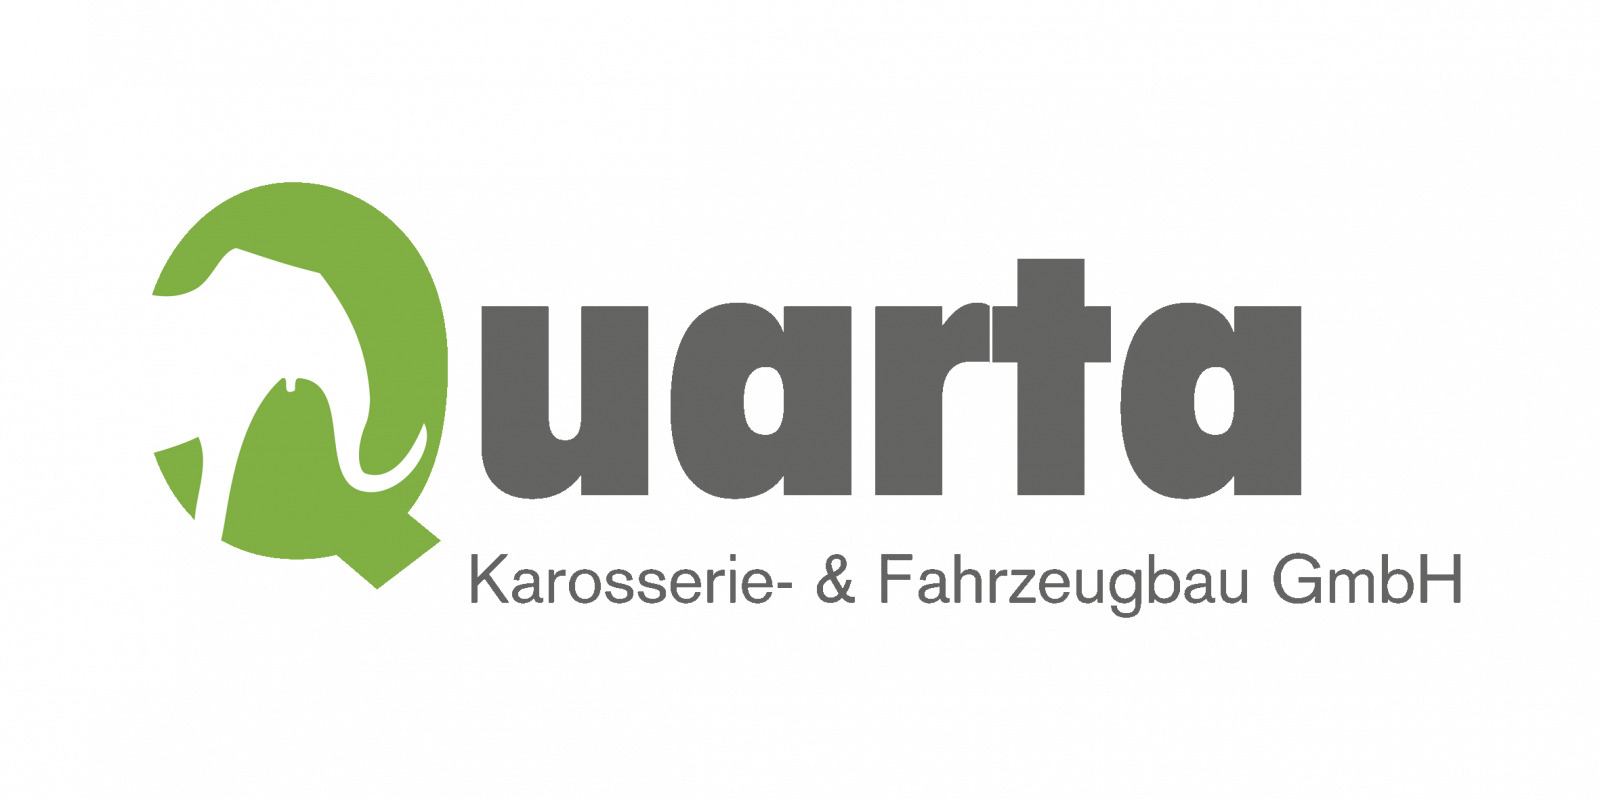 Quarta Karosserie- und Fahrzeugbau GmbH